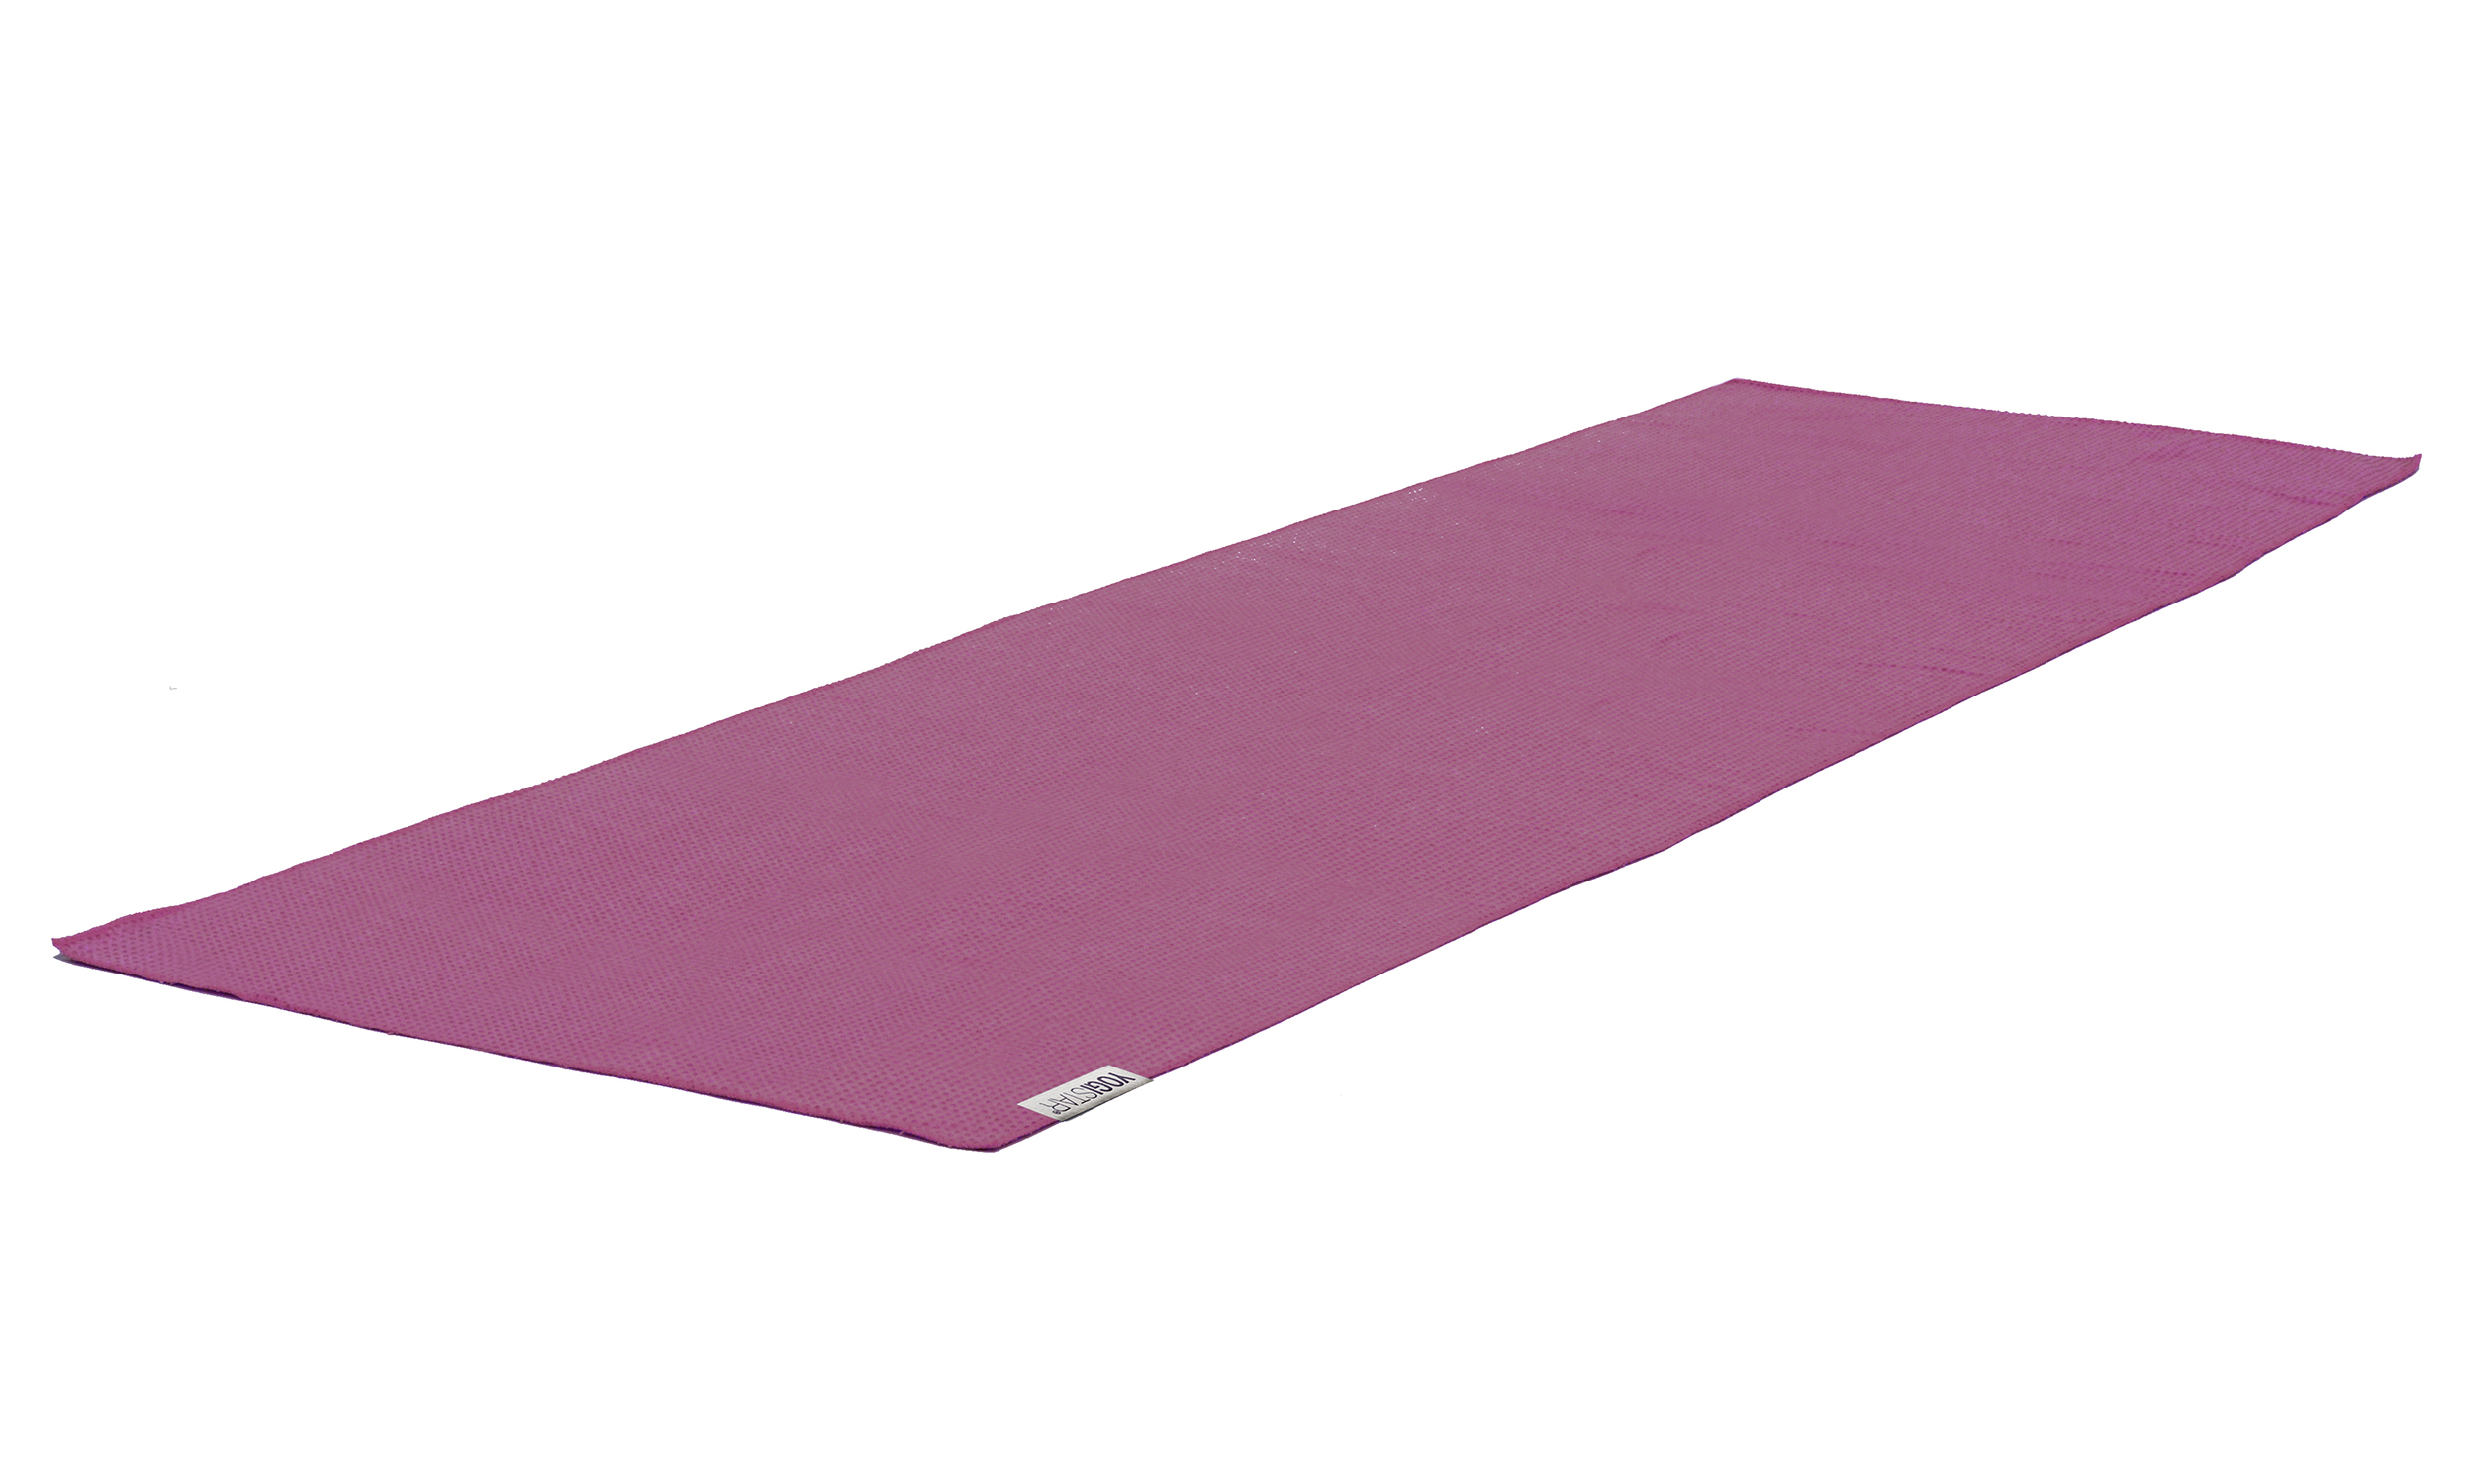 YOGISTAR.COM | Yoga towel 'Yogitowel® Deluxe' | Yoga-Equipment, Yoga mats  and Yoga